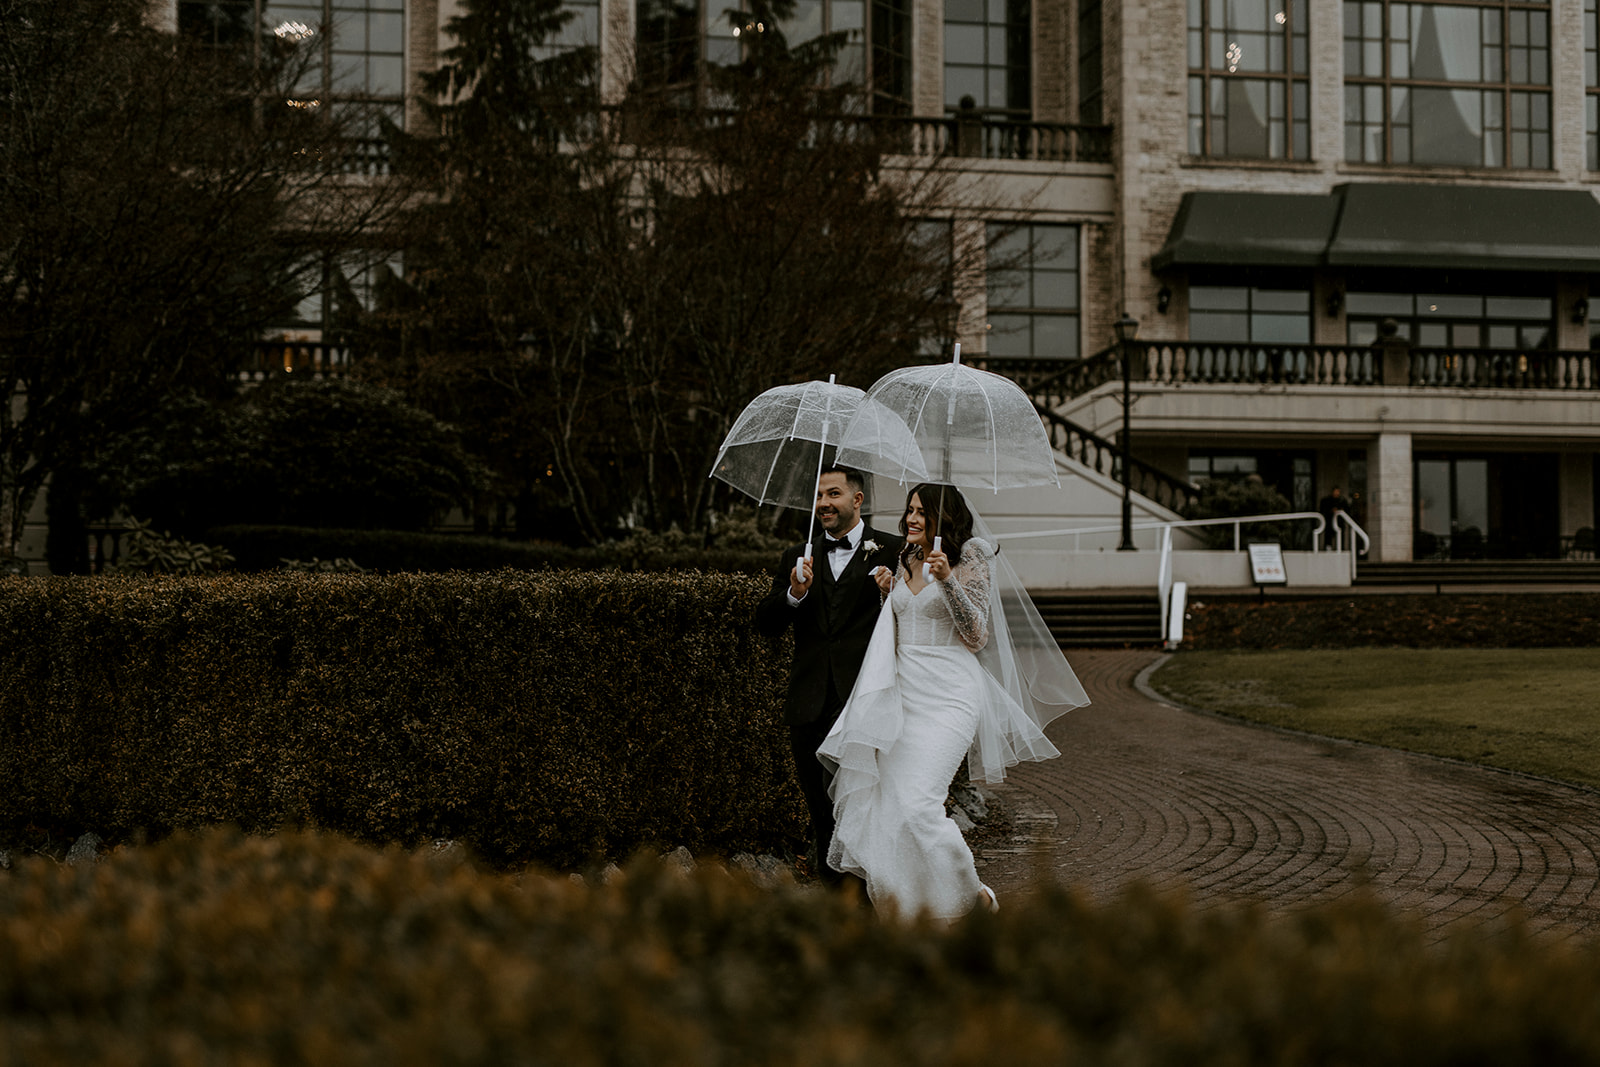 Rainy Wedding at Swaneset Golf in Pitt Meadows